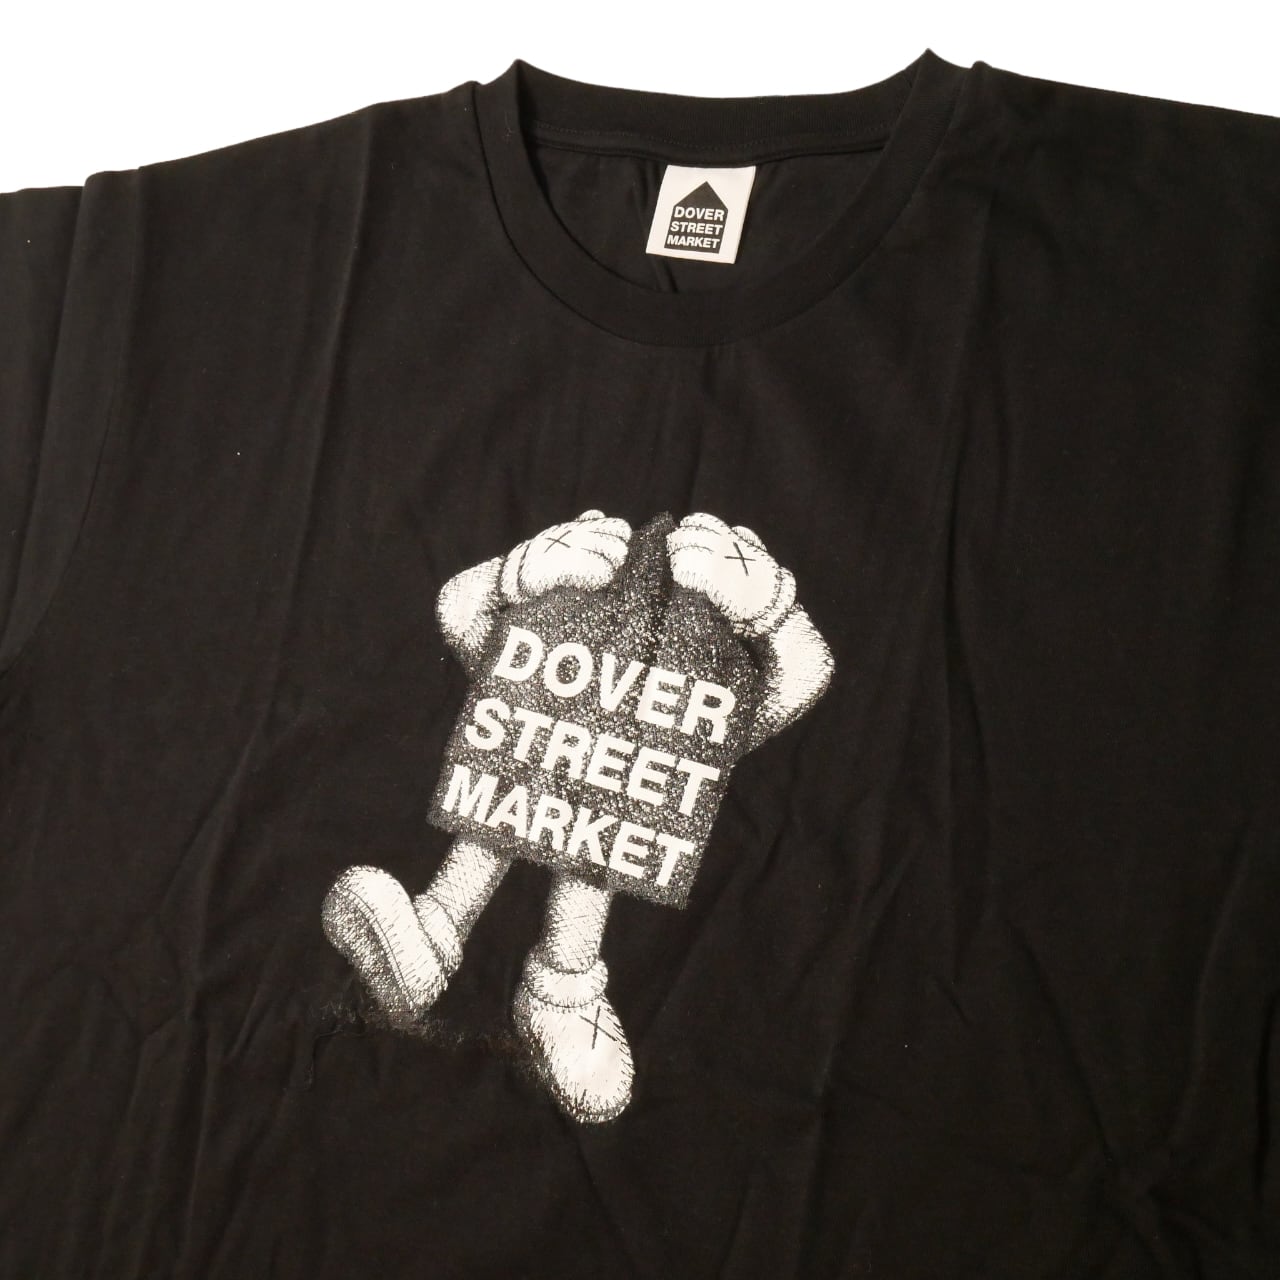 Kaws x Dover Street Market T-Shirt